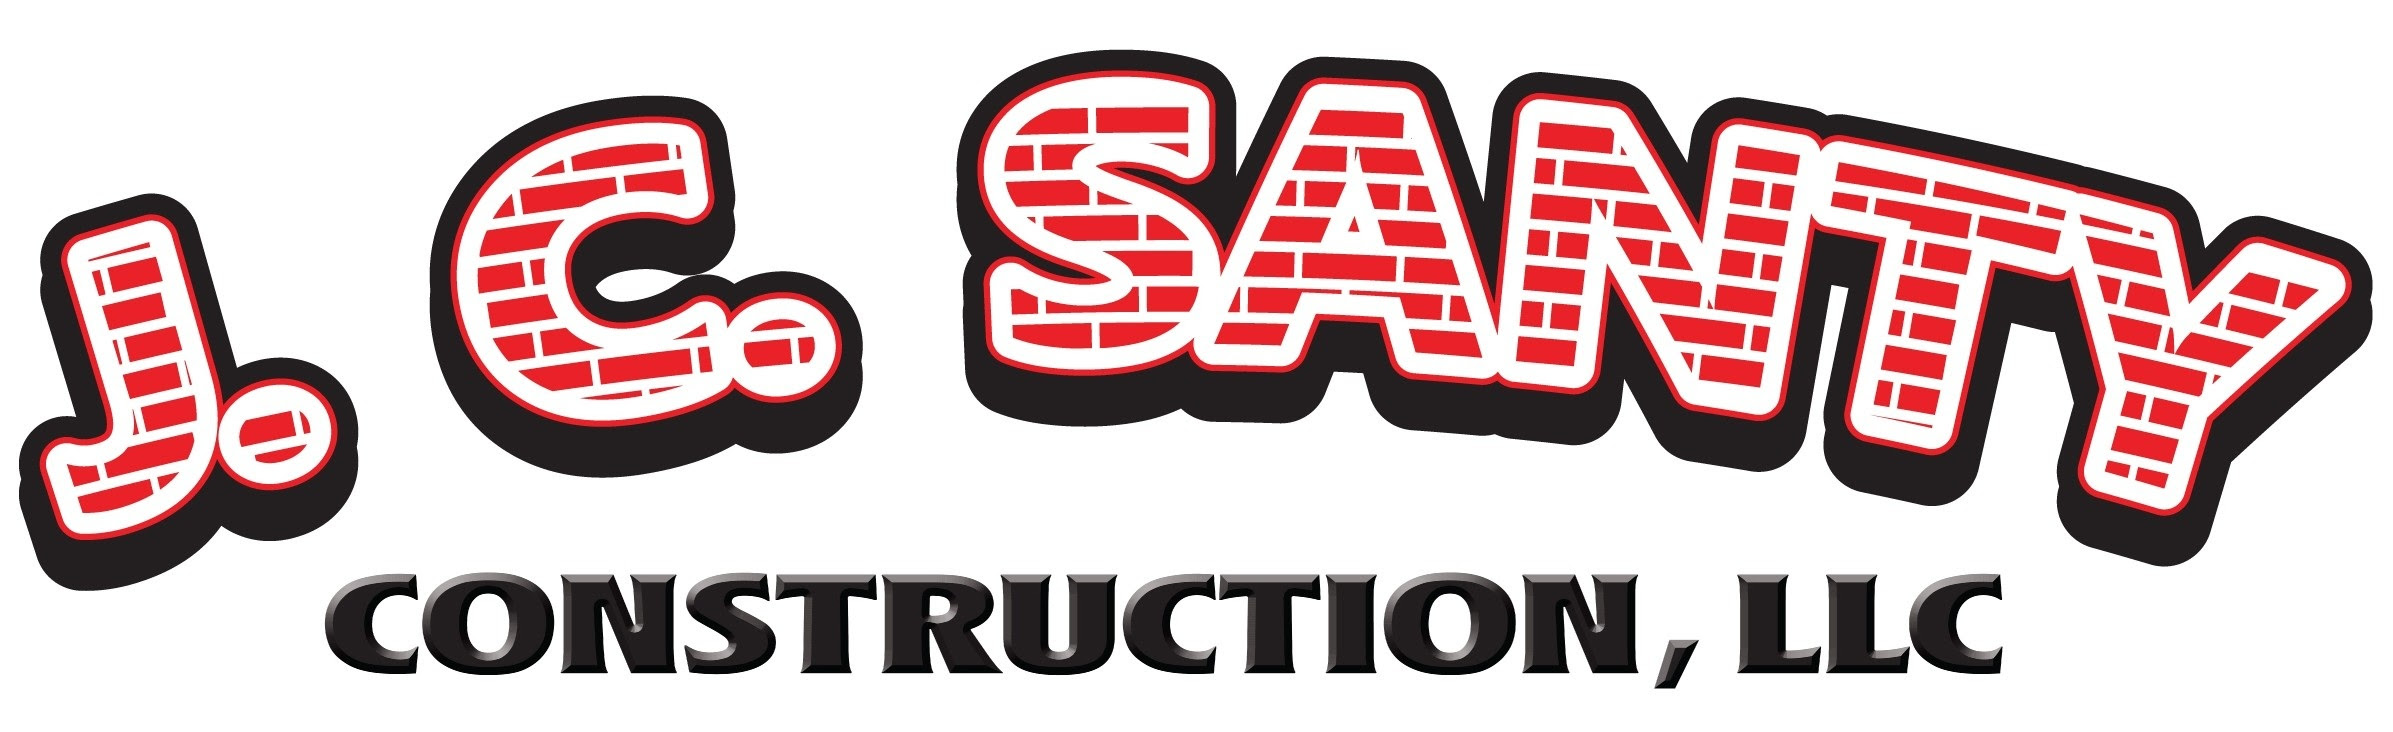 J. C. Santy Construction, LLC Logo